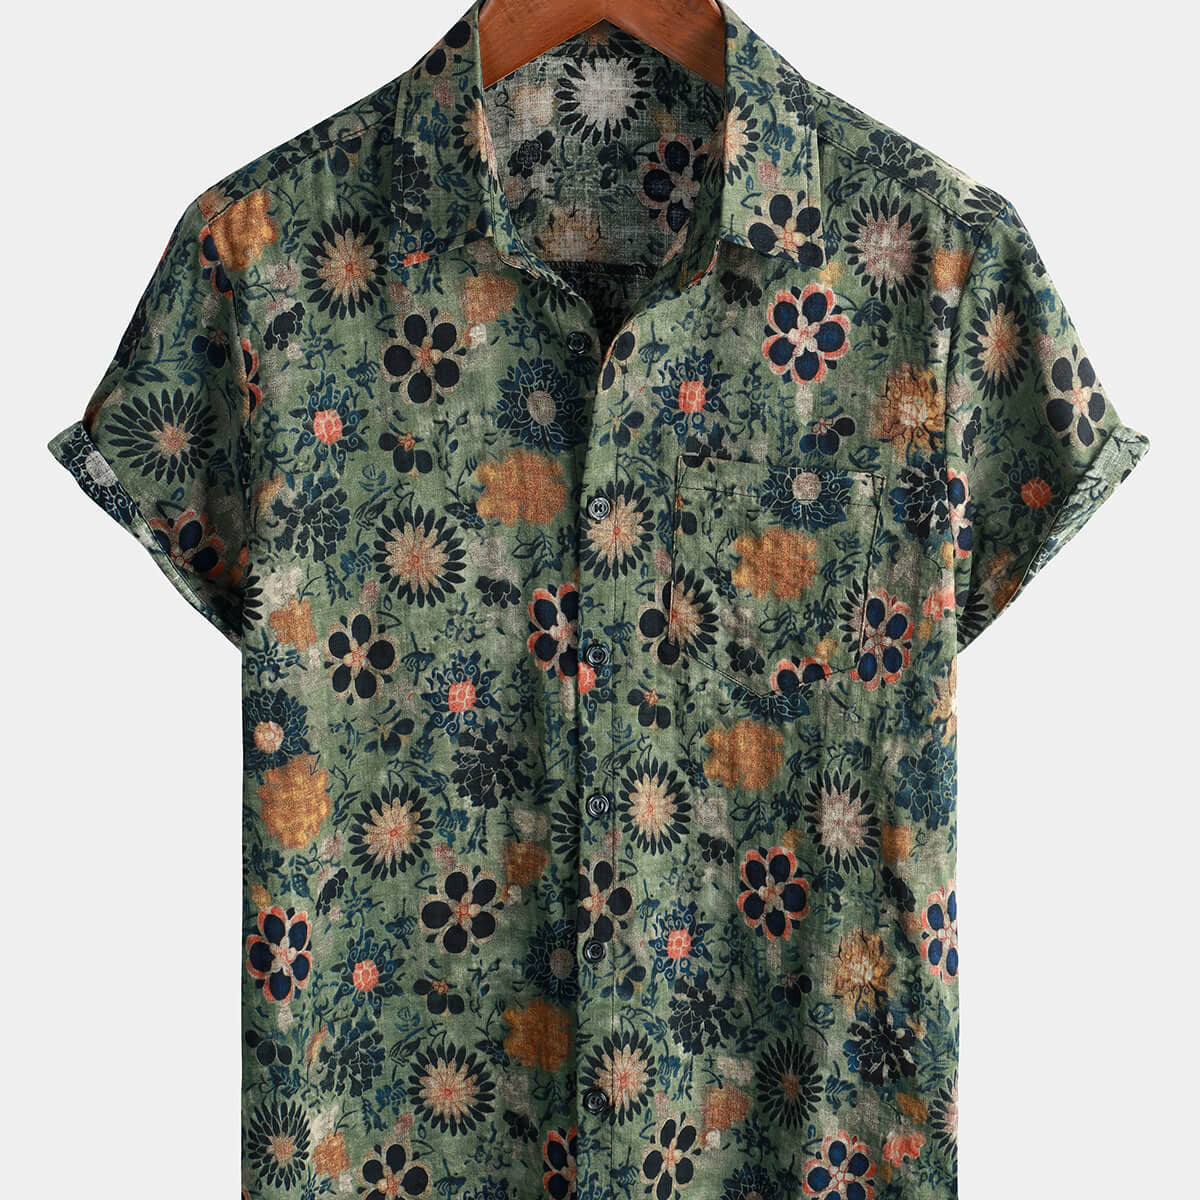 Men's Casual Vintage Floral Print Short Sleeve Shirt